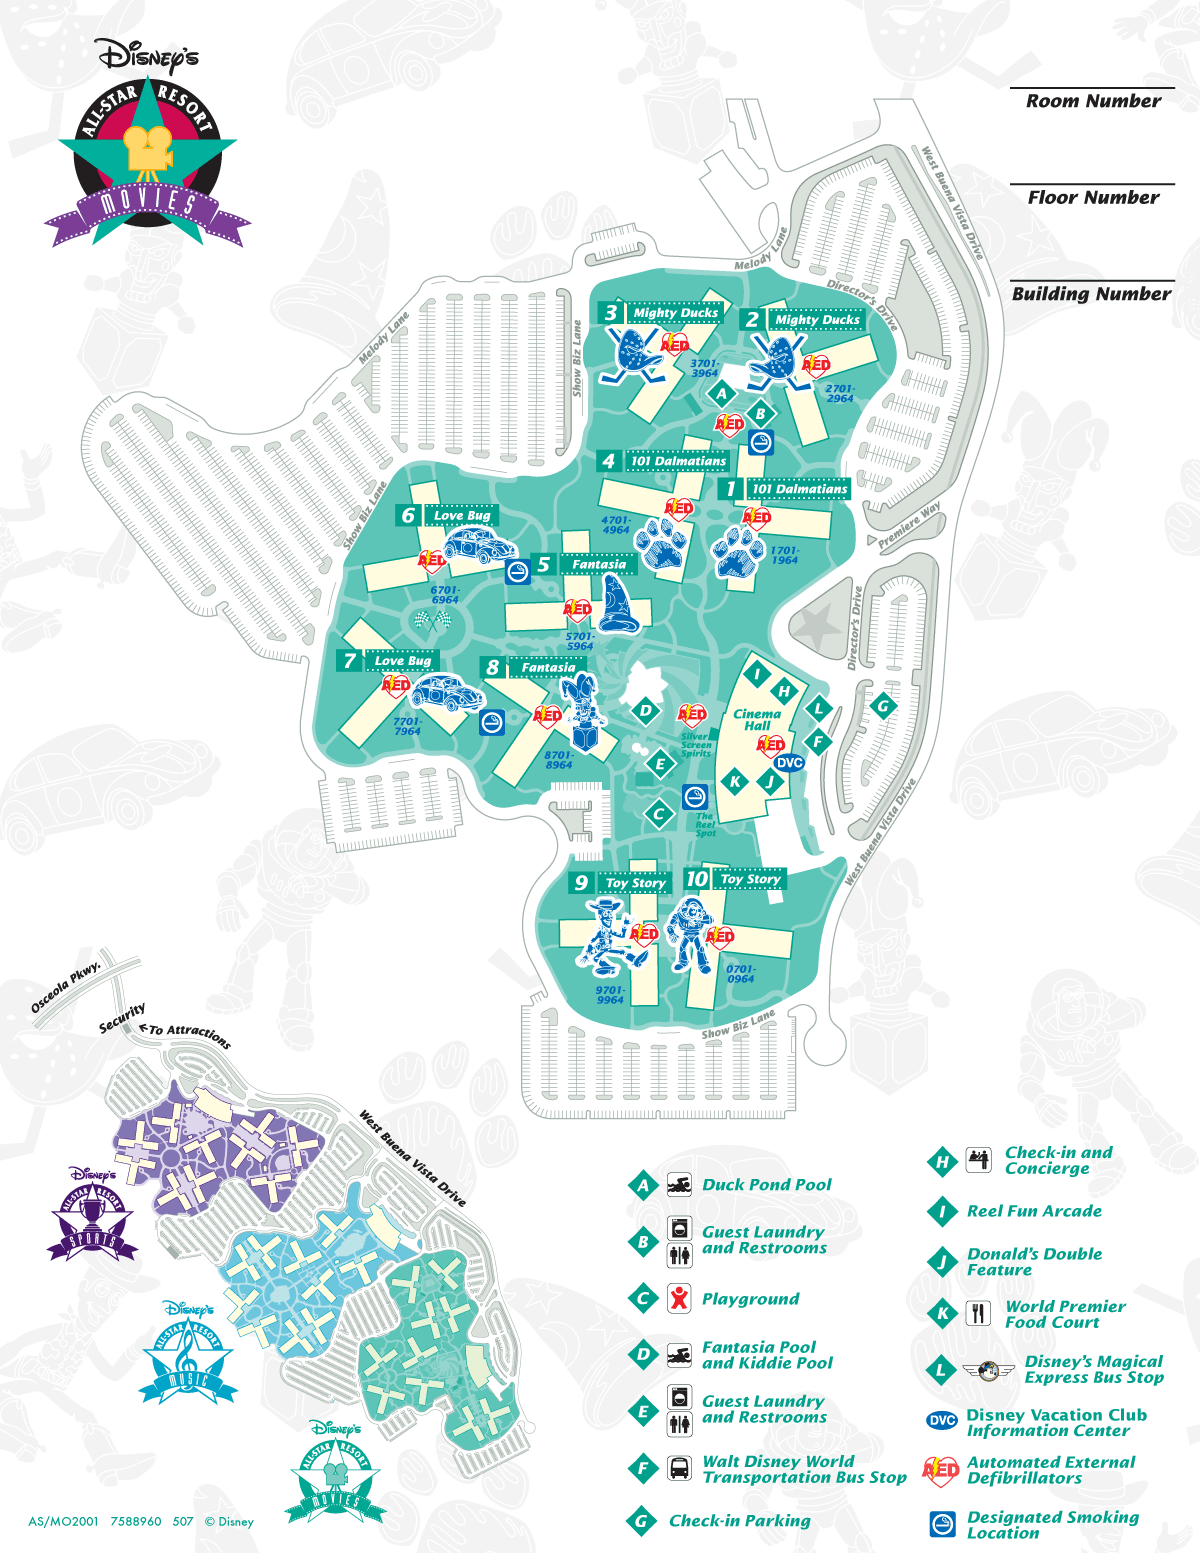 Disney's All Star Movies Resort Map  